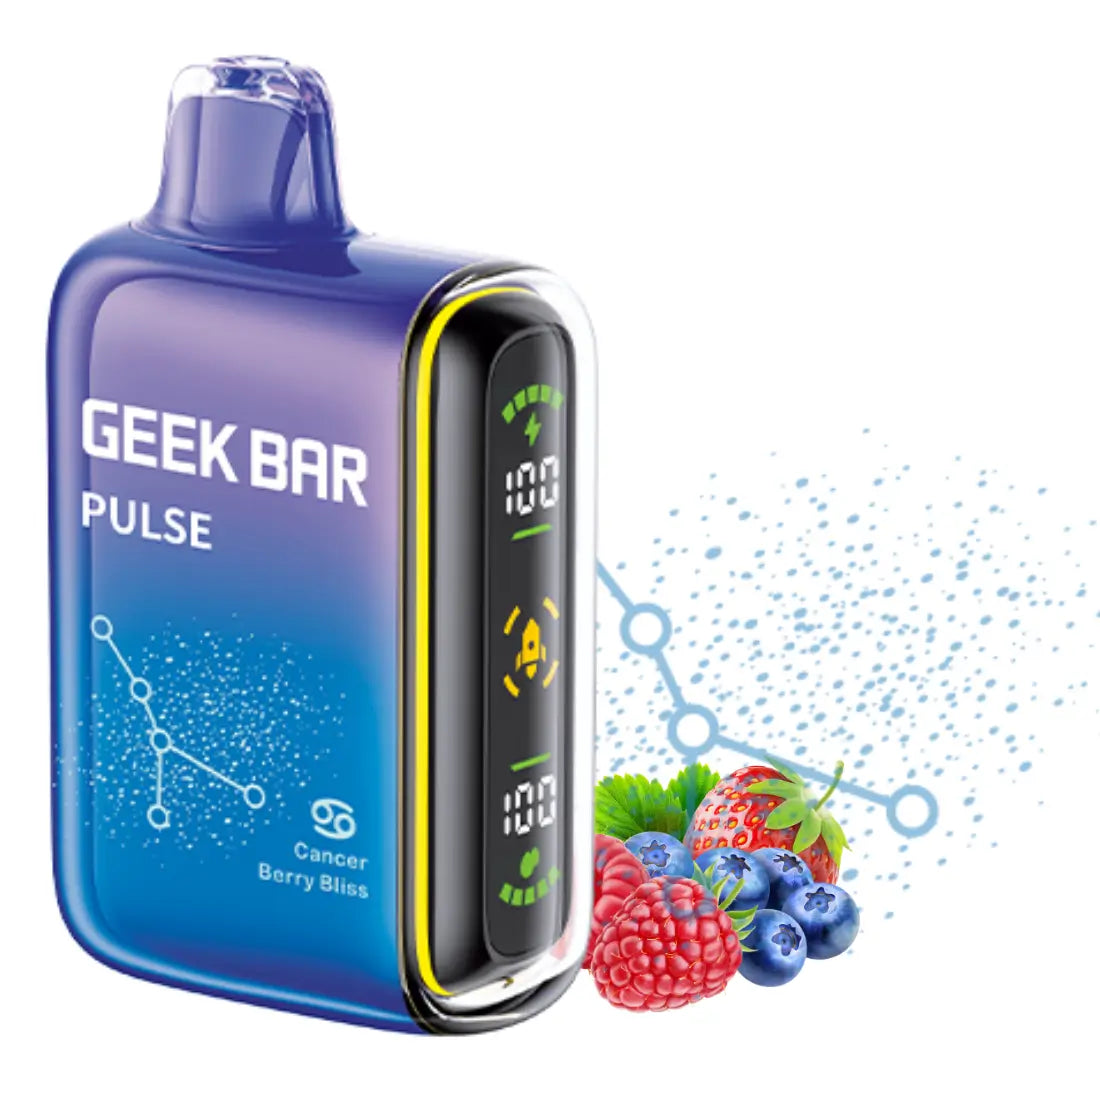 Geek Bar Pulse Washington Berry Bliss